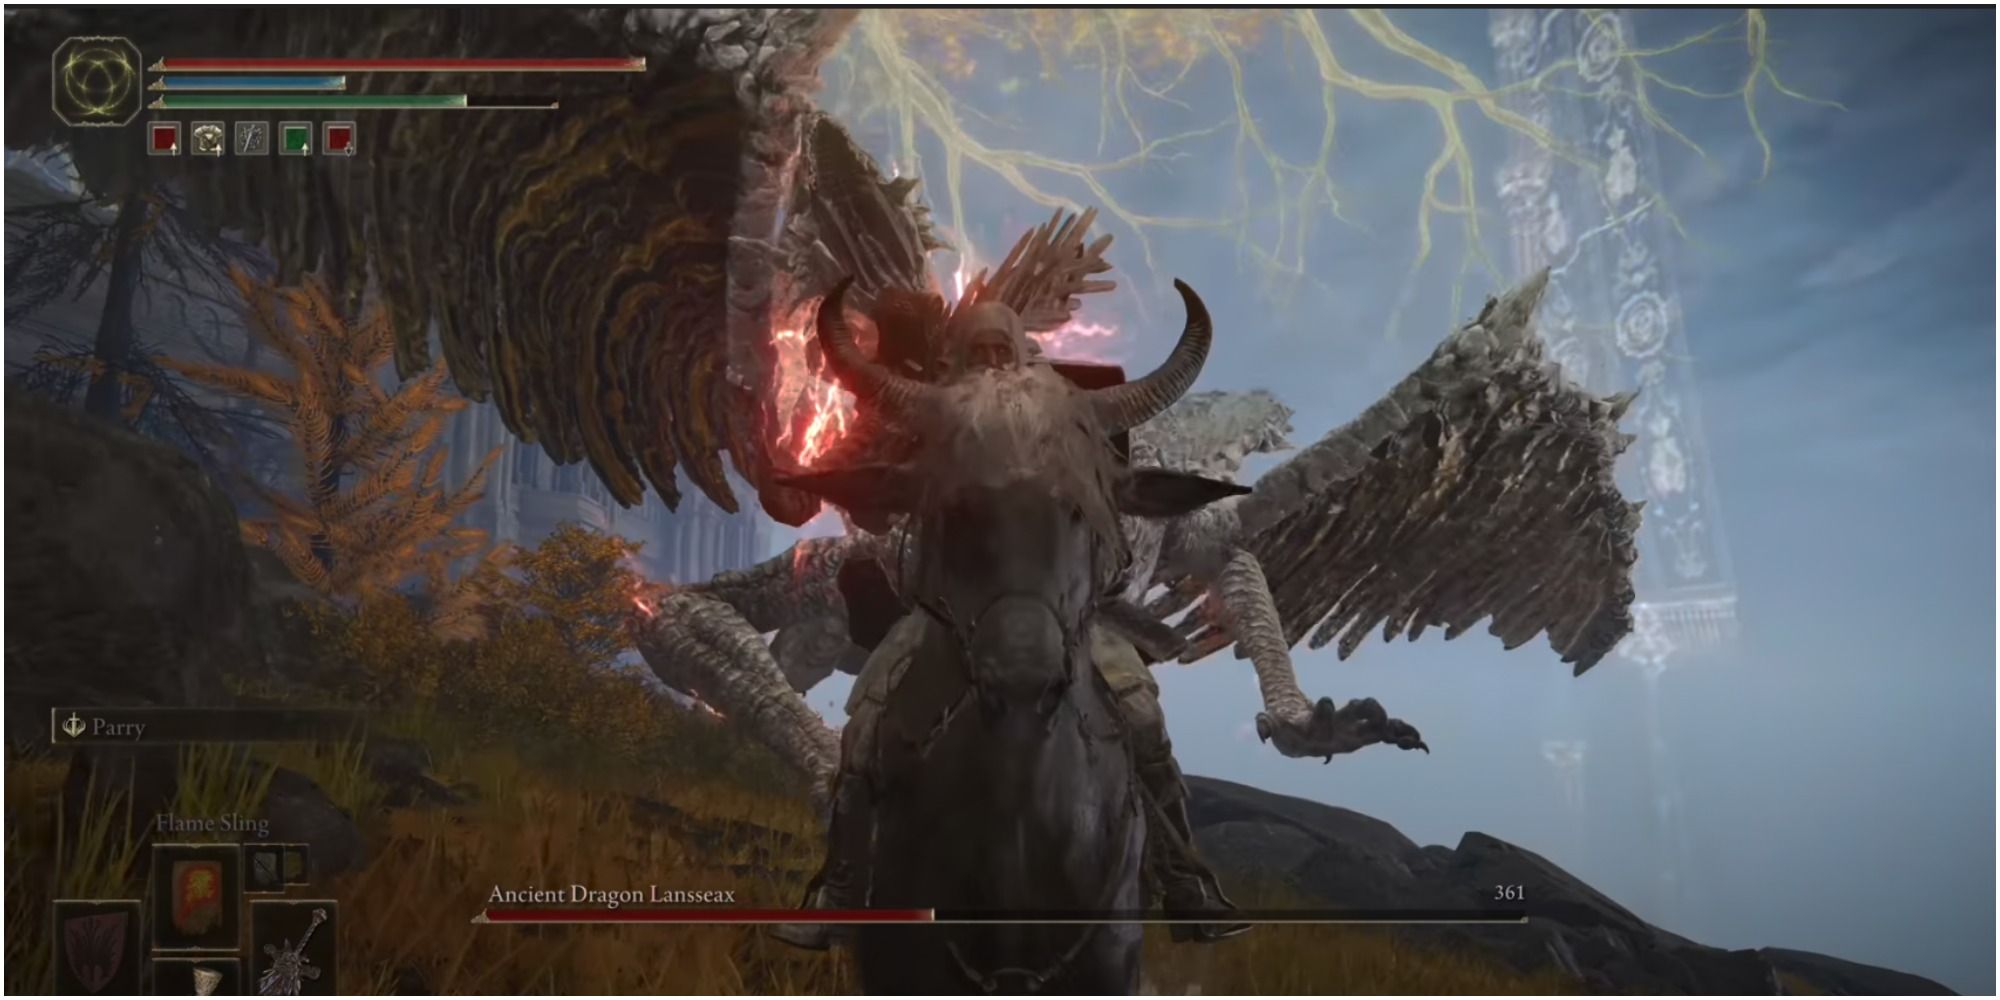 Elden Ring Ancient Dragon Lansseax's bite attack